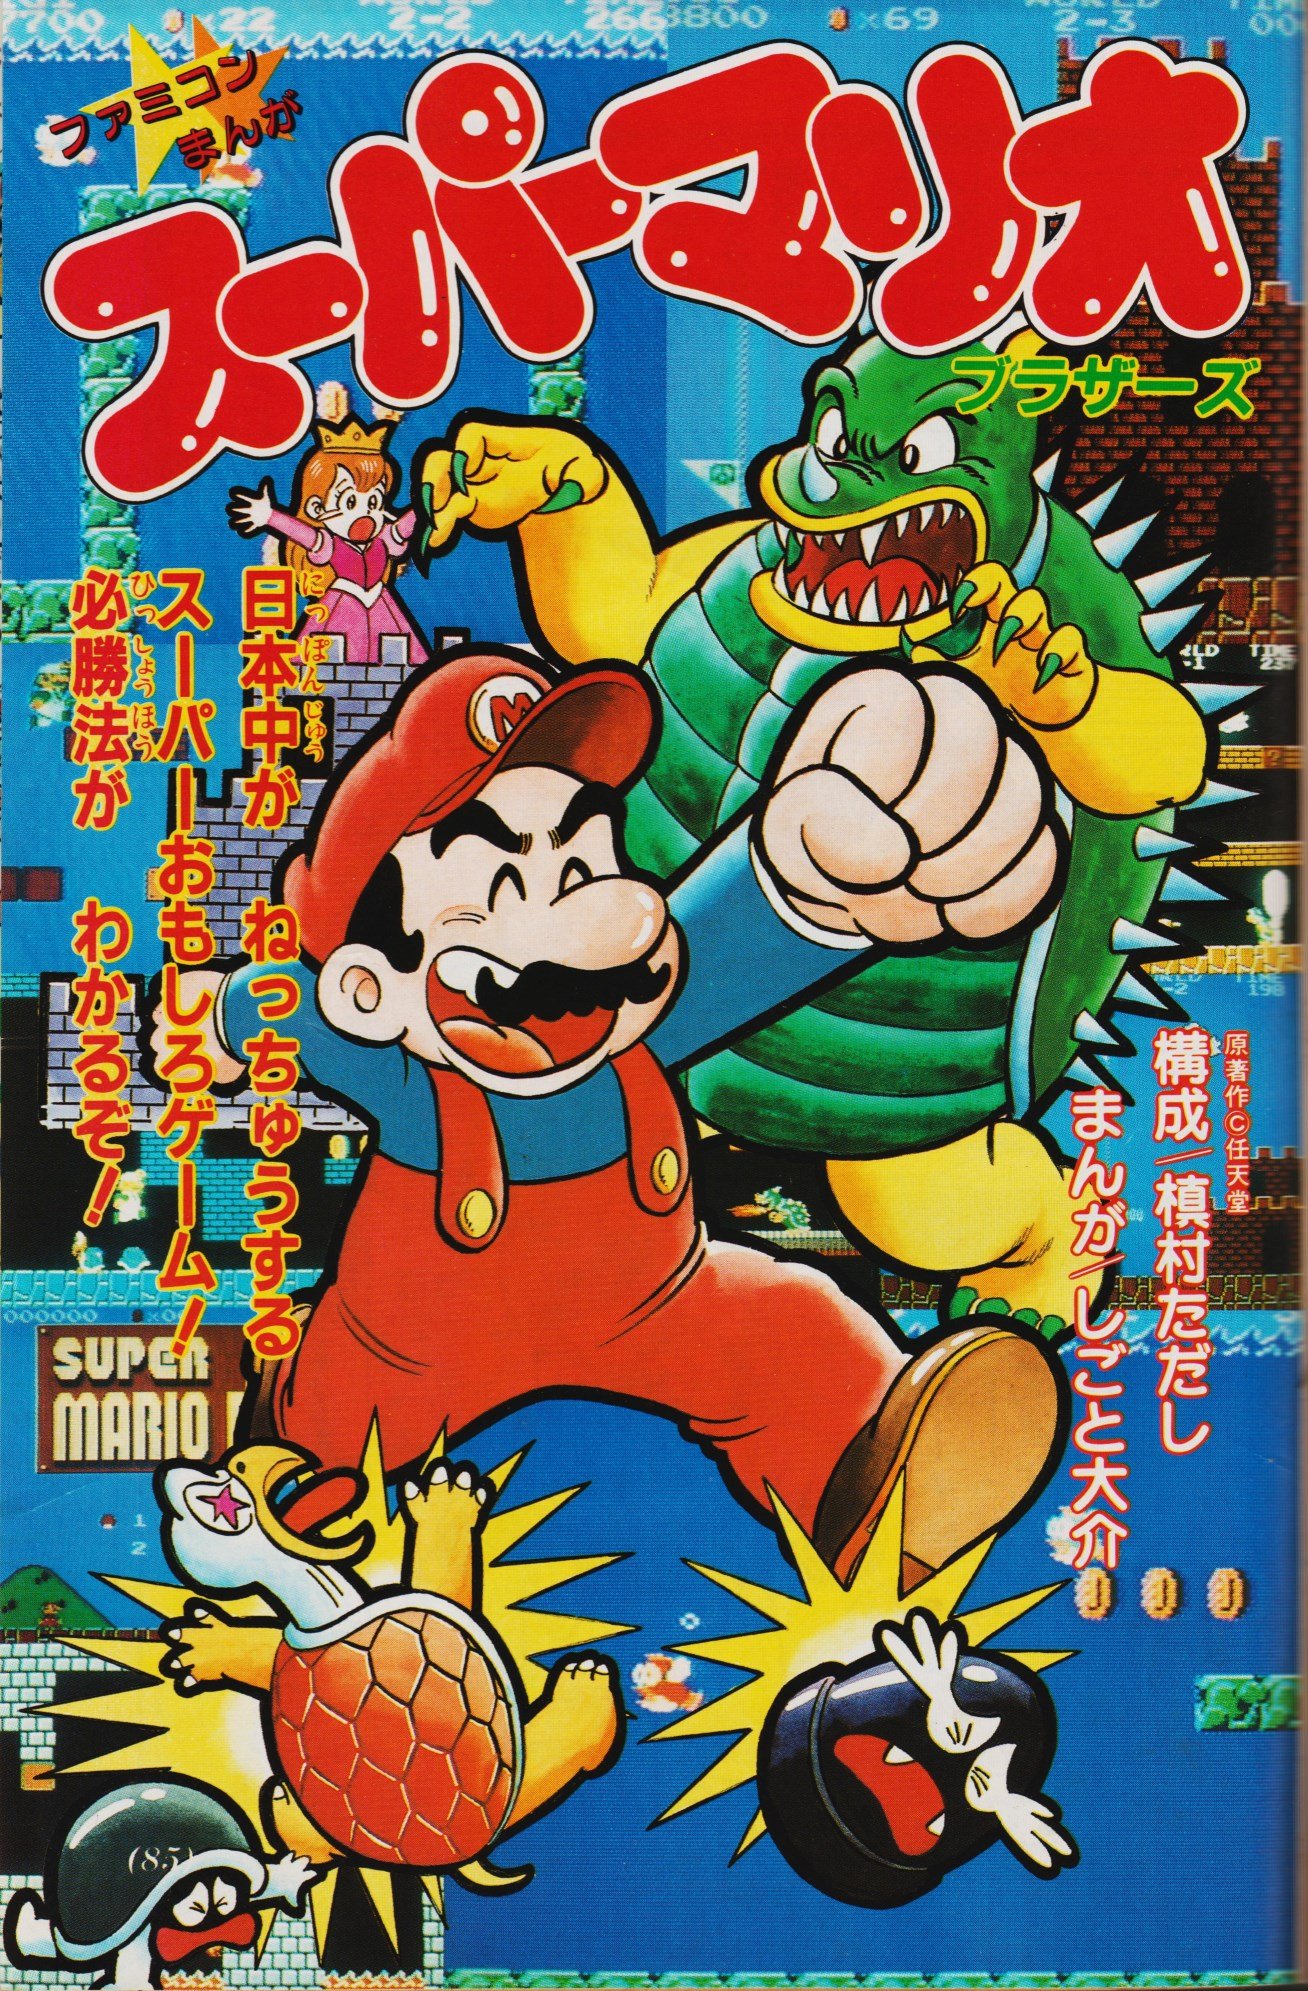 NES Manga: Super Mario Bros. cover 1